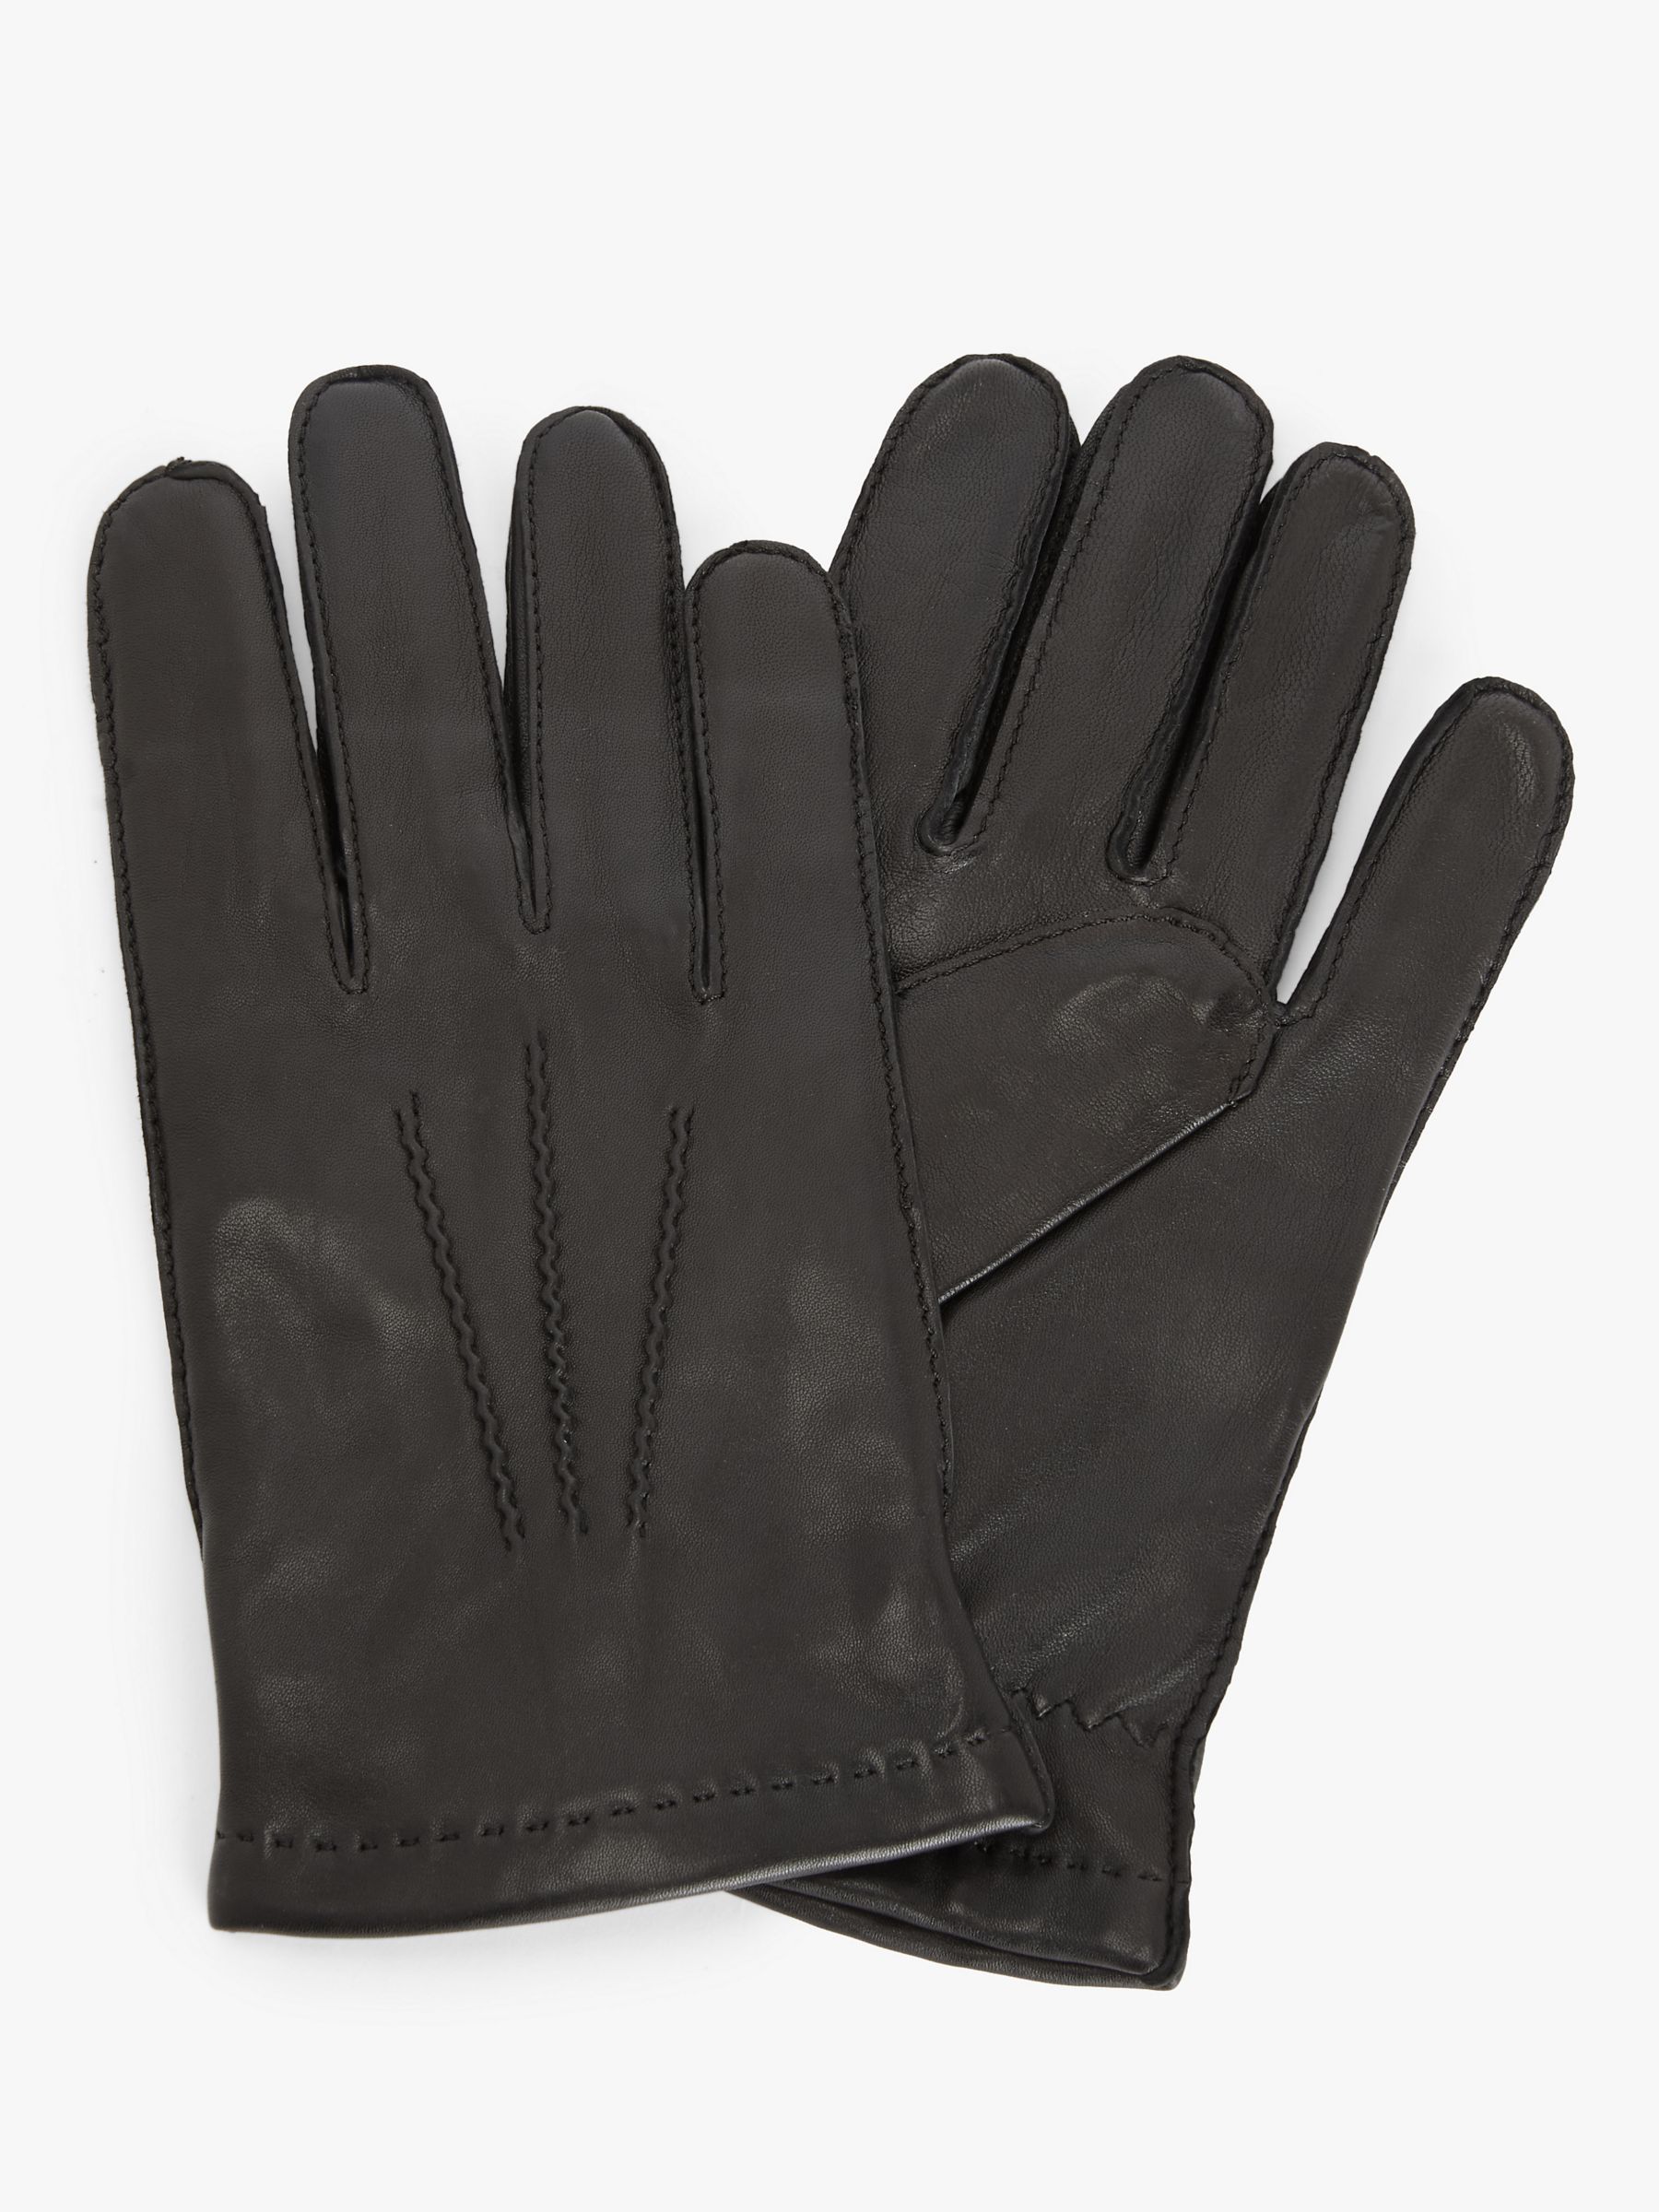 Buy John Lewis Merino Wool Leather Gloves Online at johnlewis.com